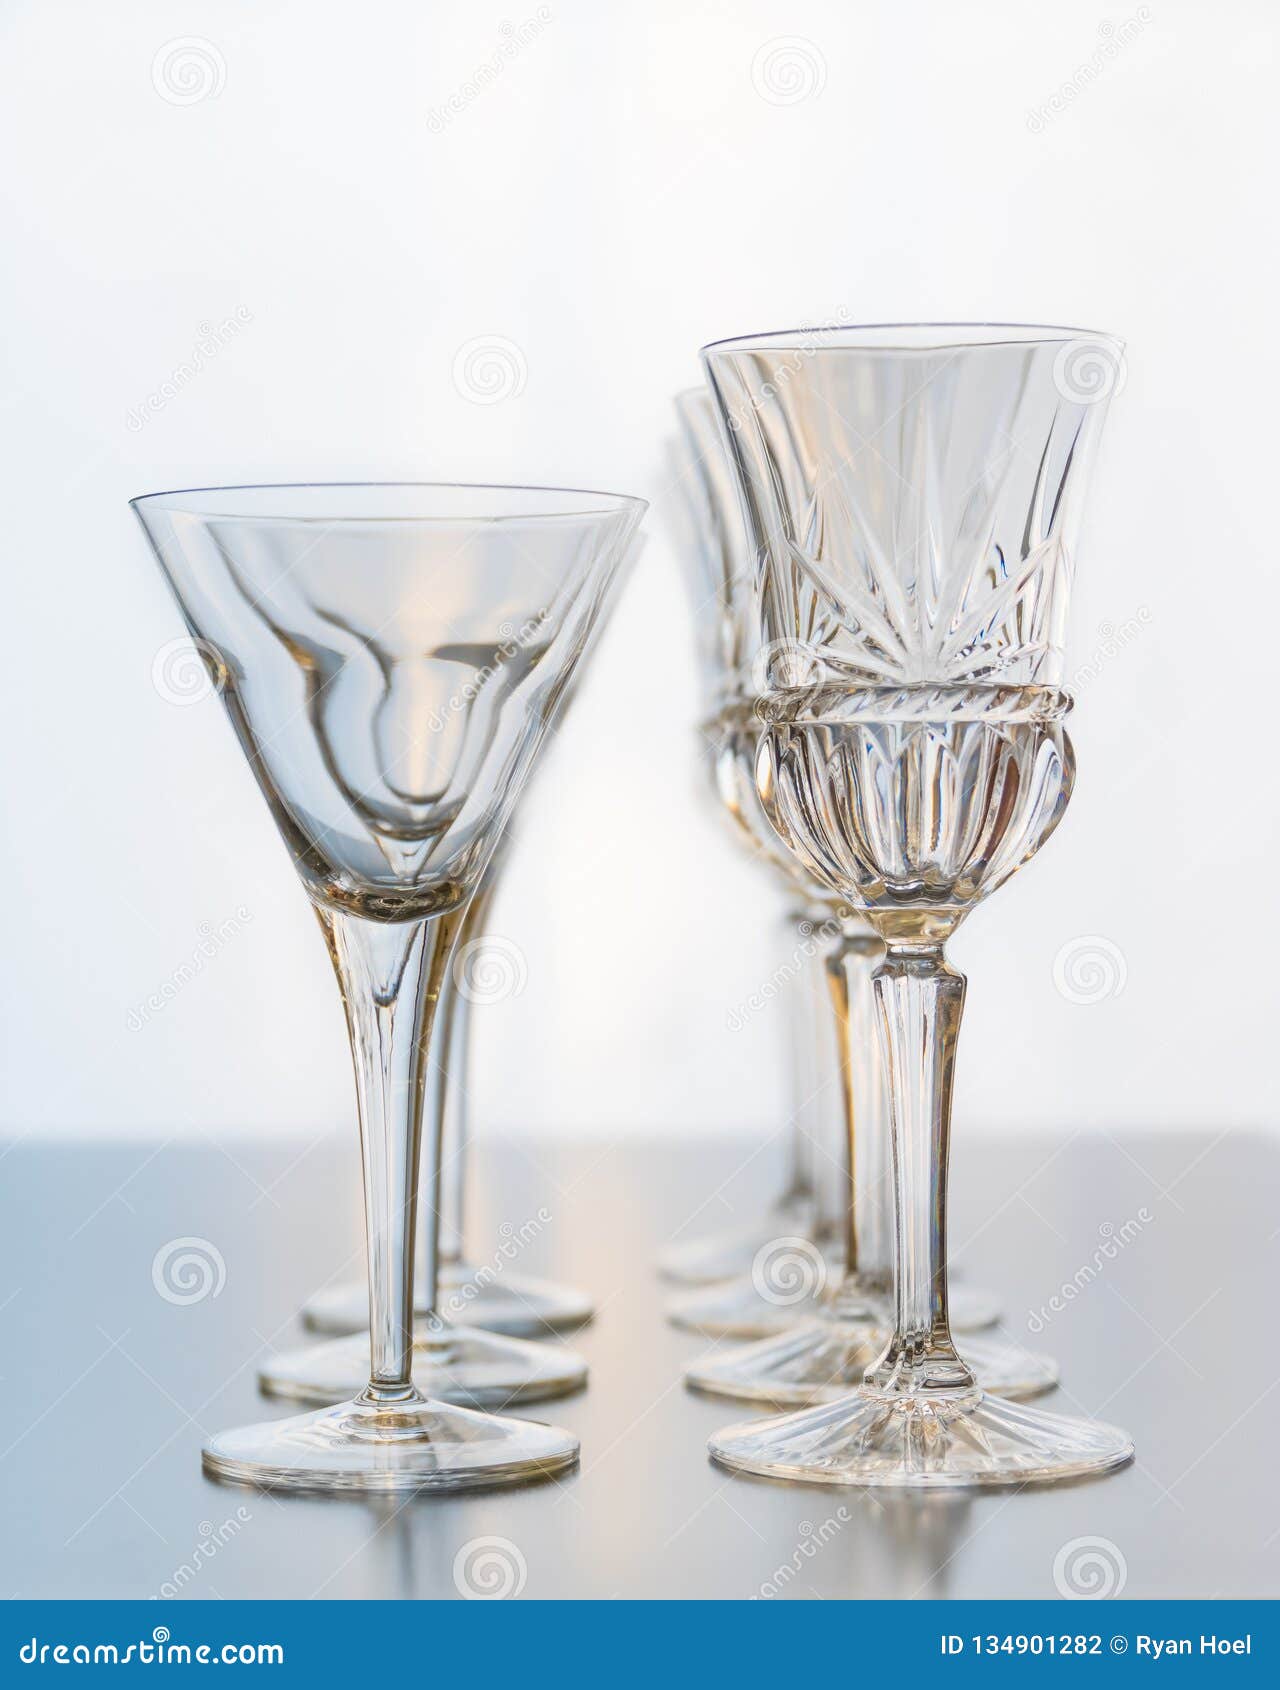 Decoration Setup Of Wine And Martini Glasses Set On A